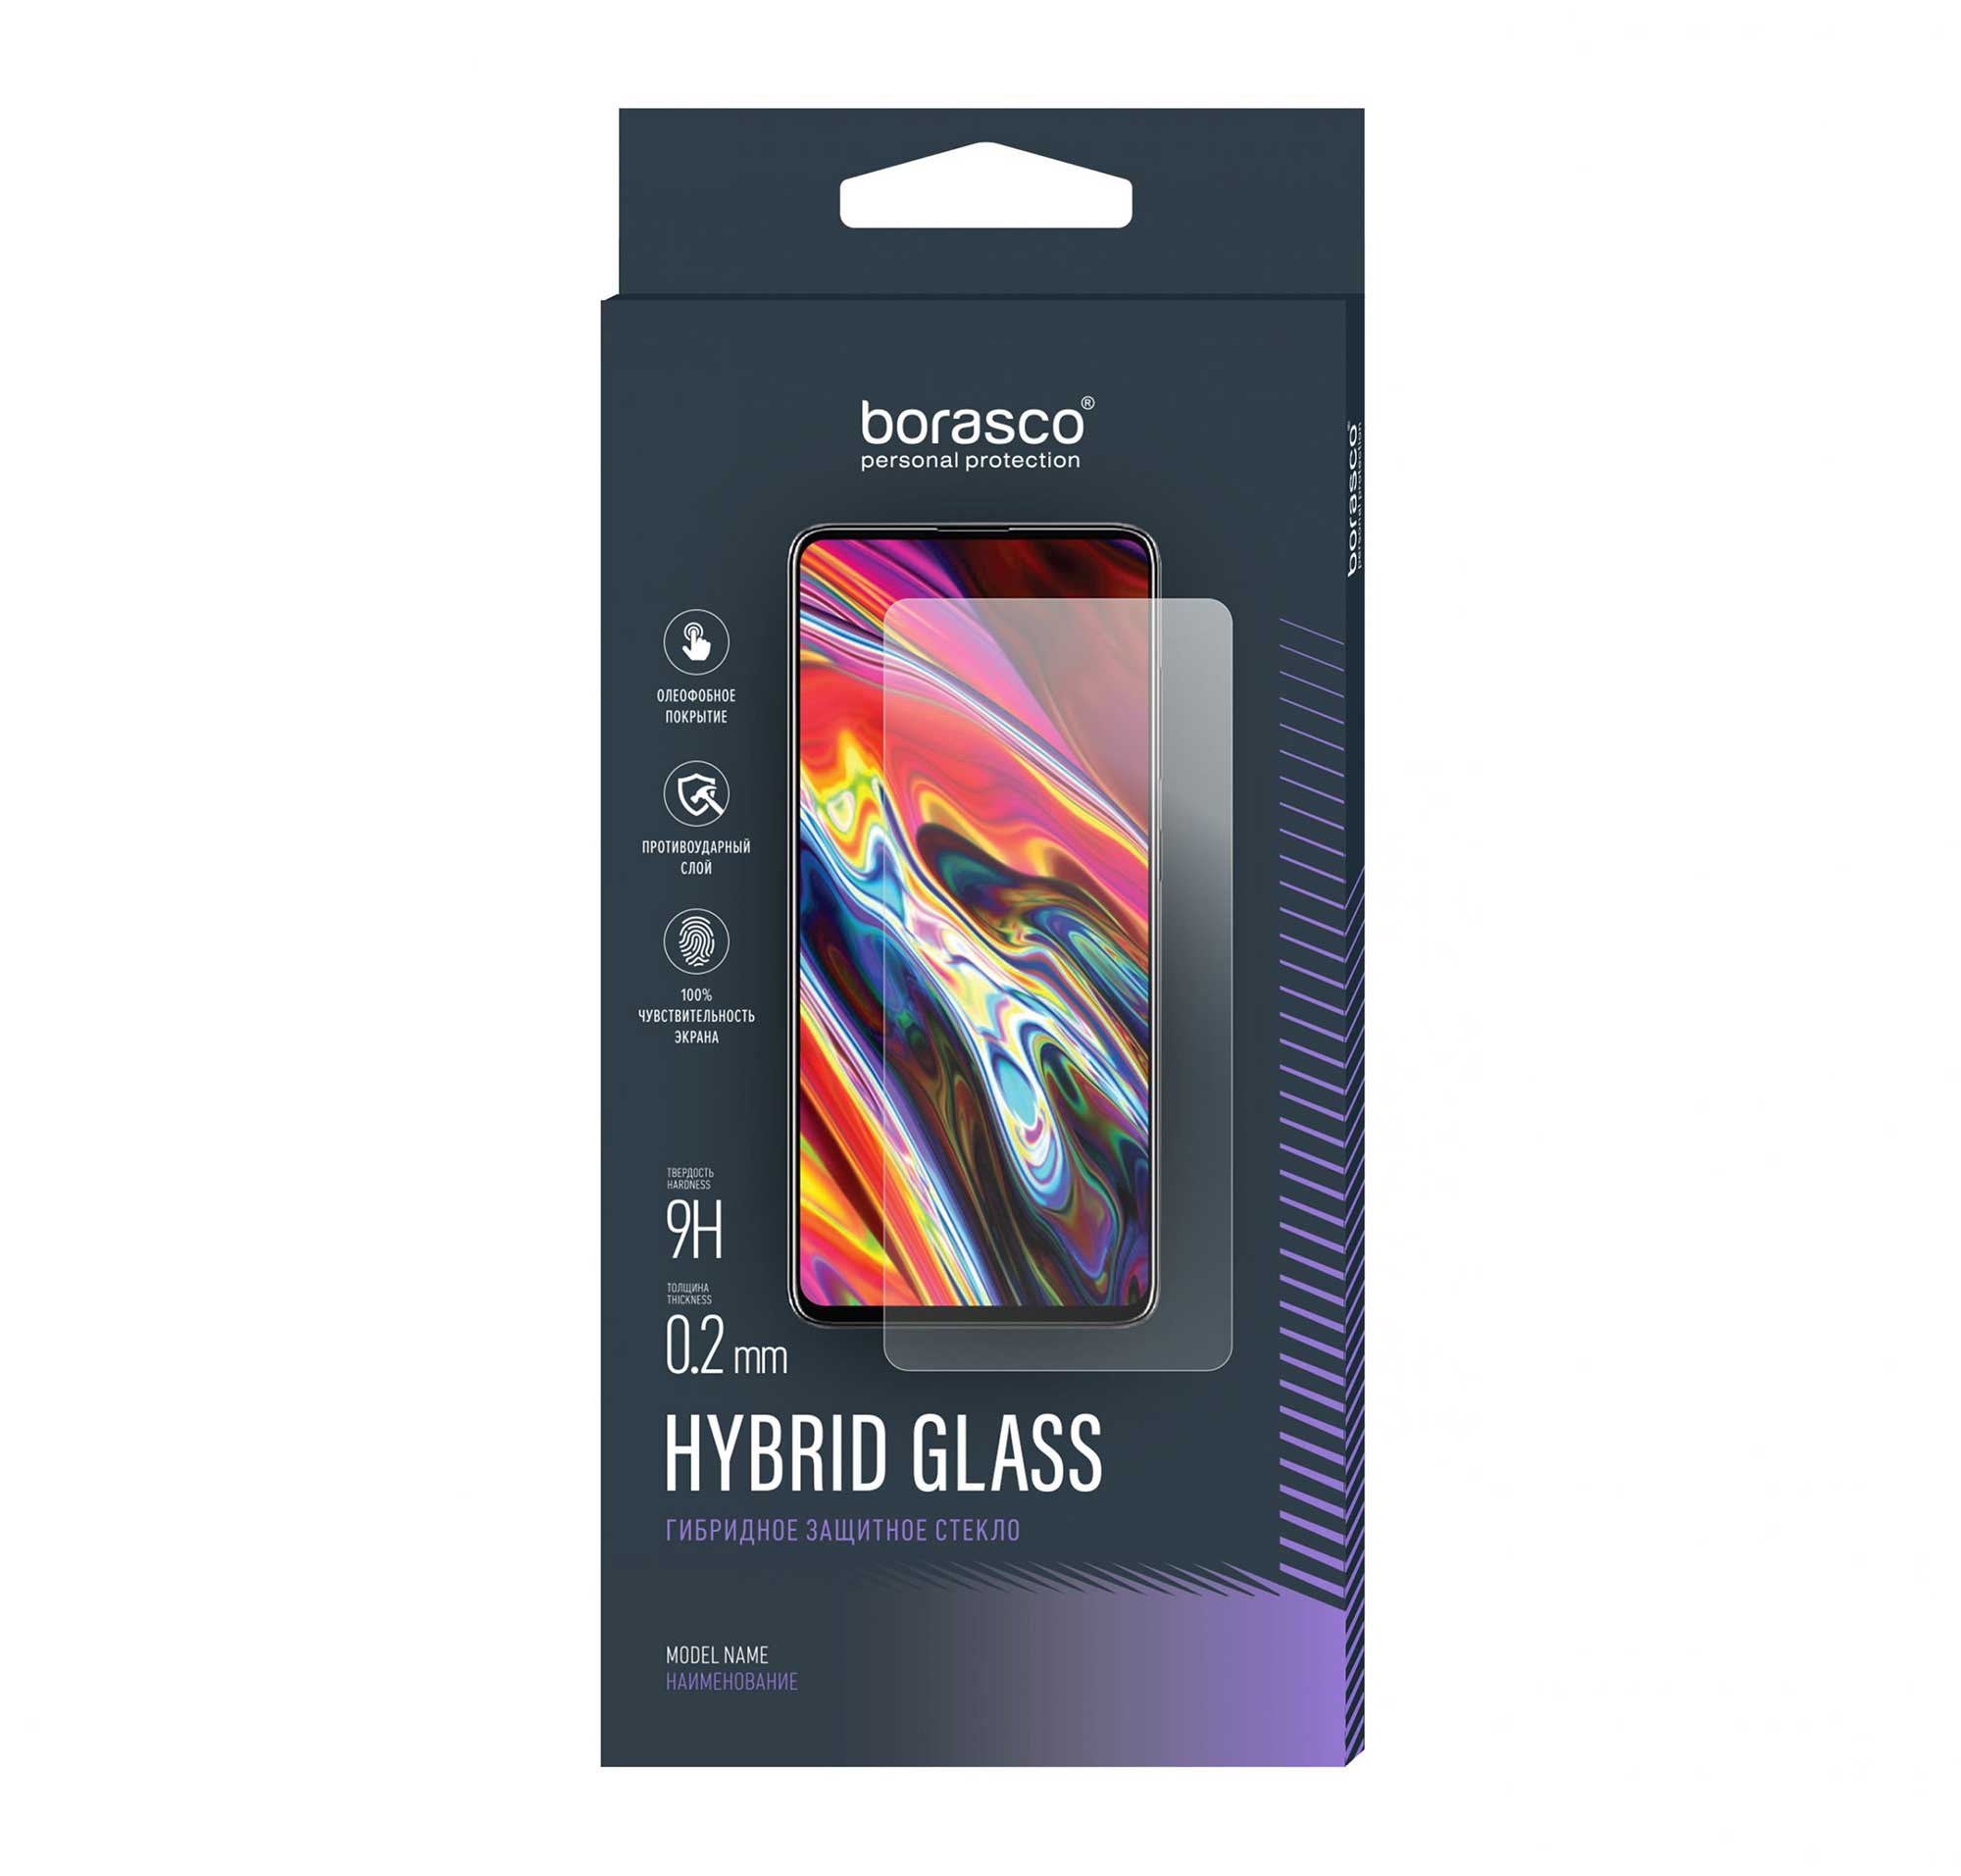 Защитное стекло BoraSCO Hybrid Glass для Sony Xperia XZ3 защитное стекло на sony xperia xz2 compact